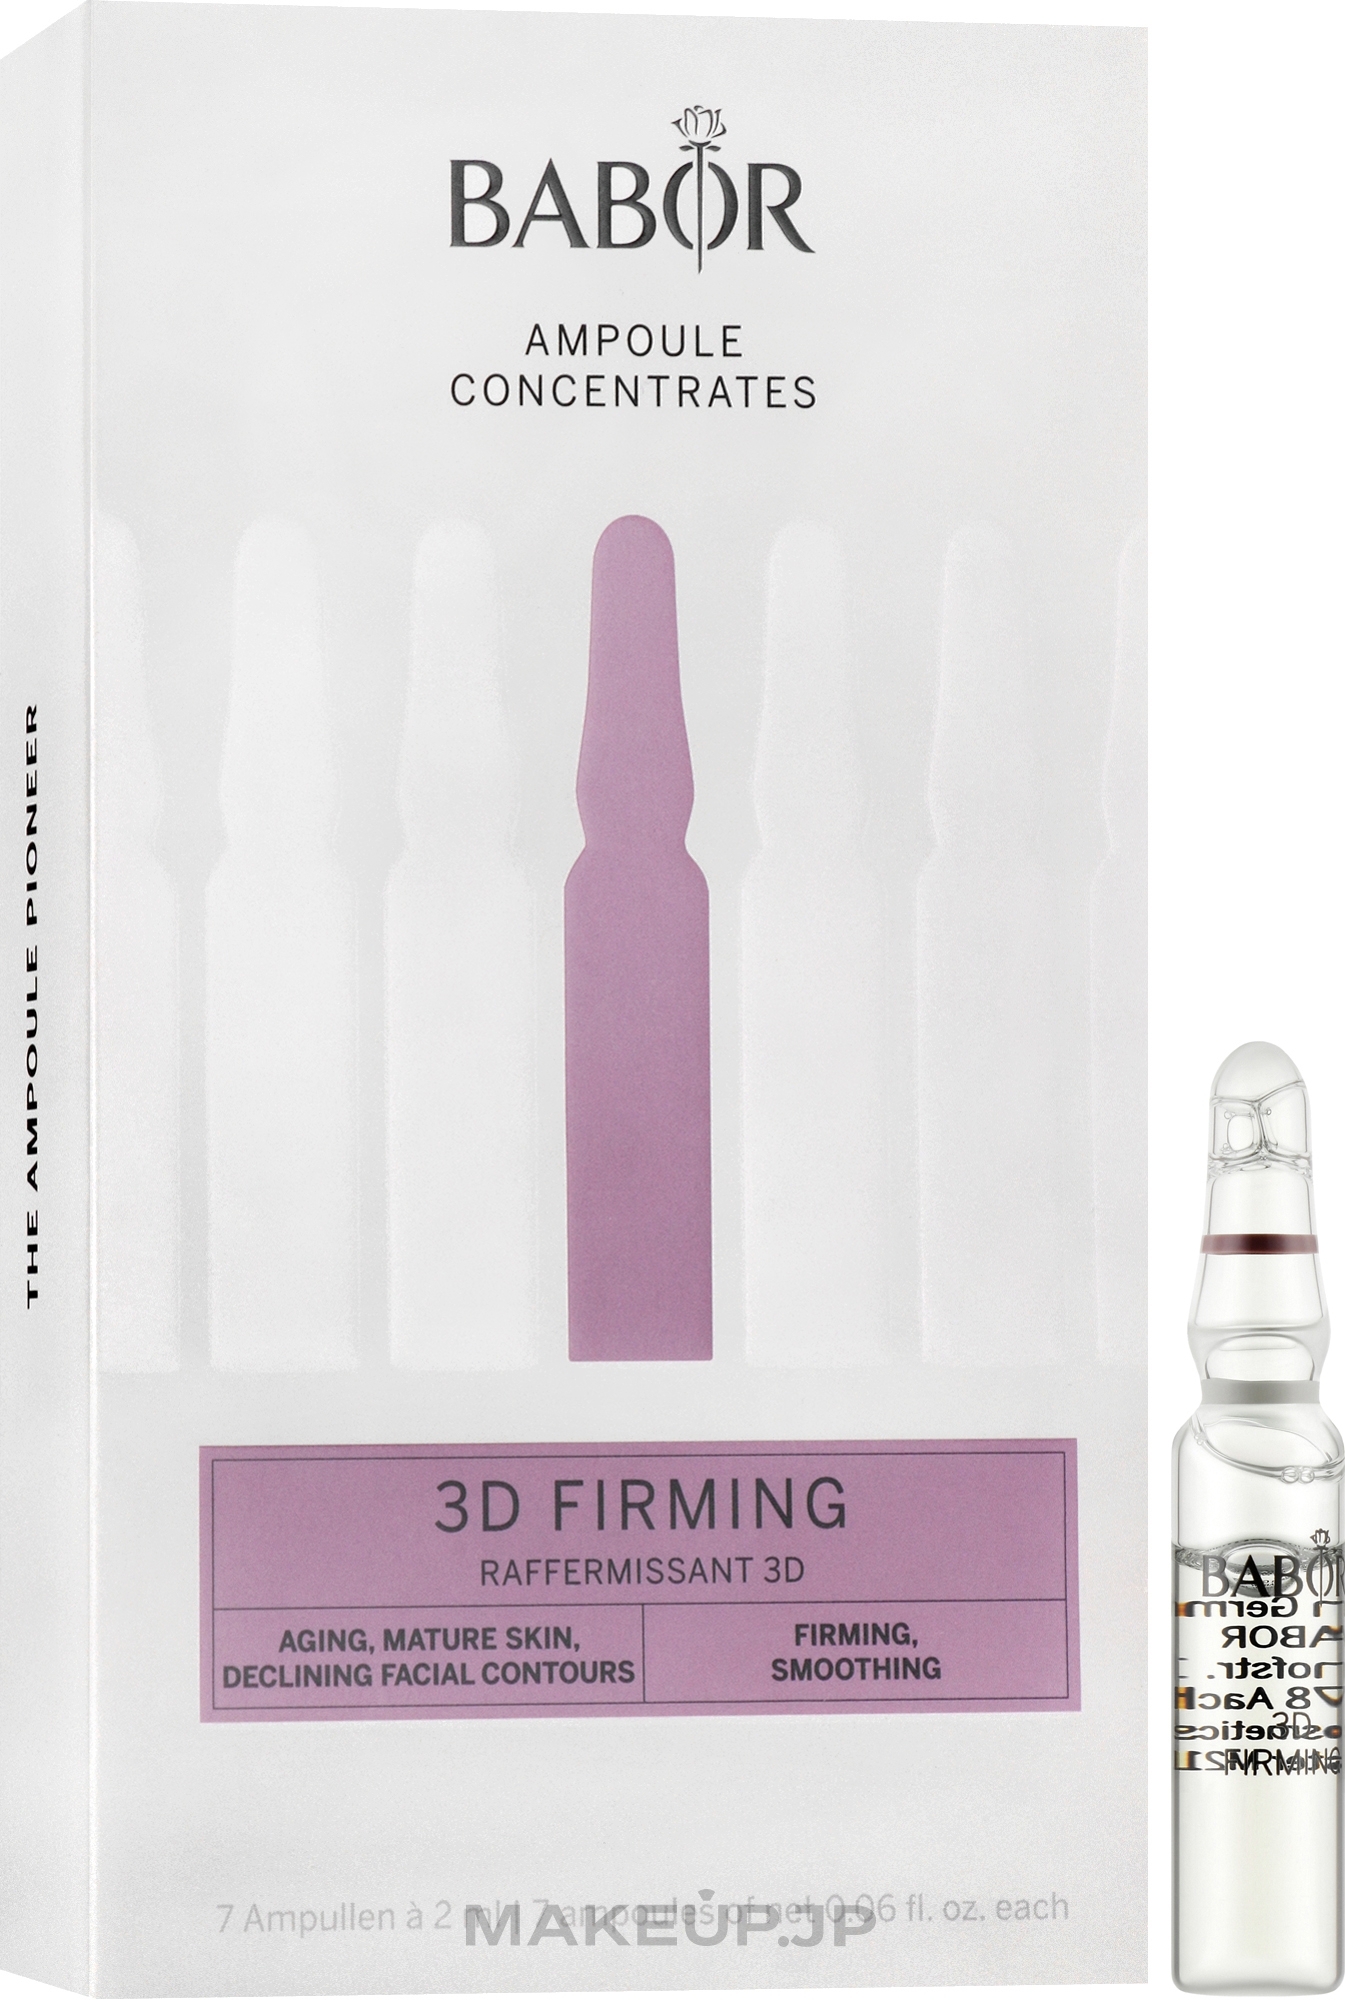 3D Firming Face Ampoules - Babor Ampoule Concentrates Lift & Firm 3D Firming — photo 7 x 2 ml